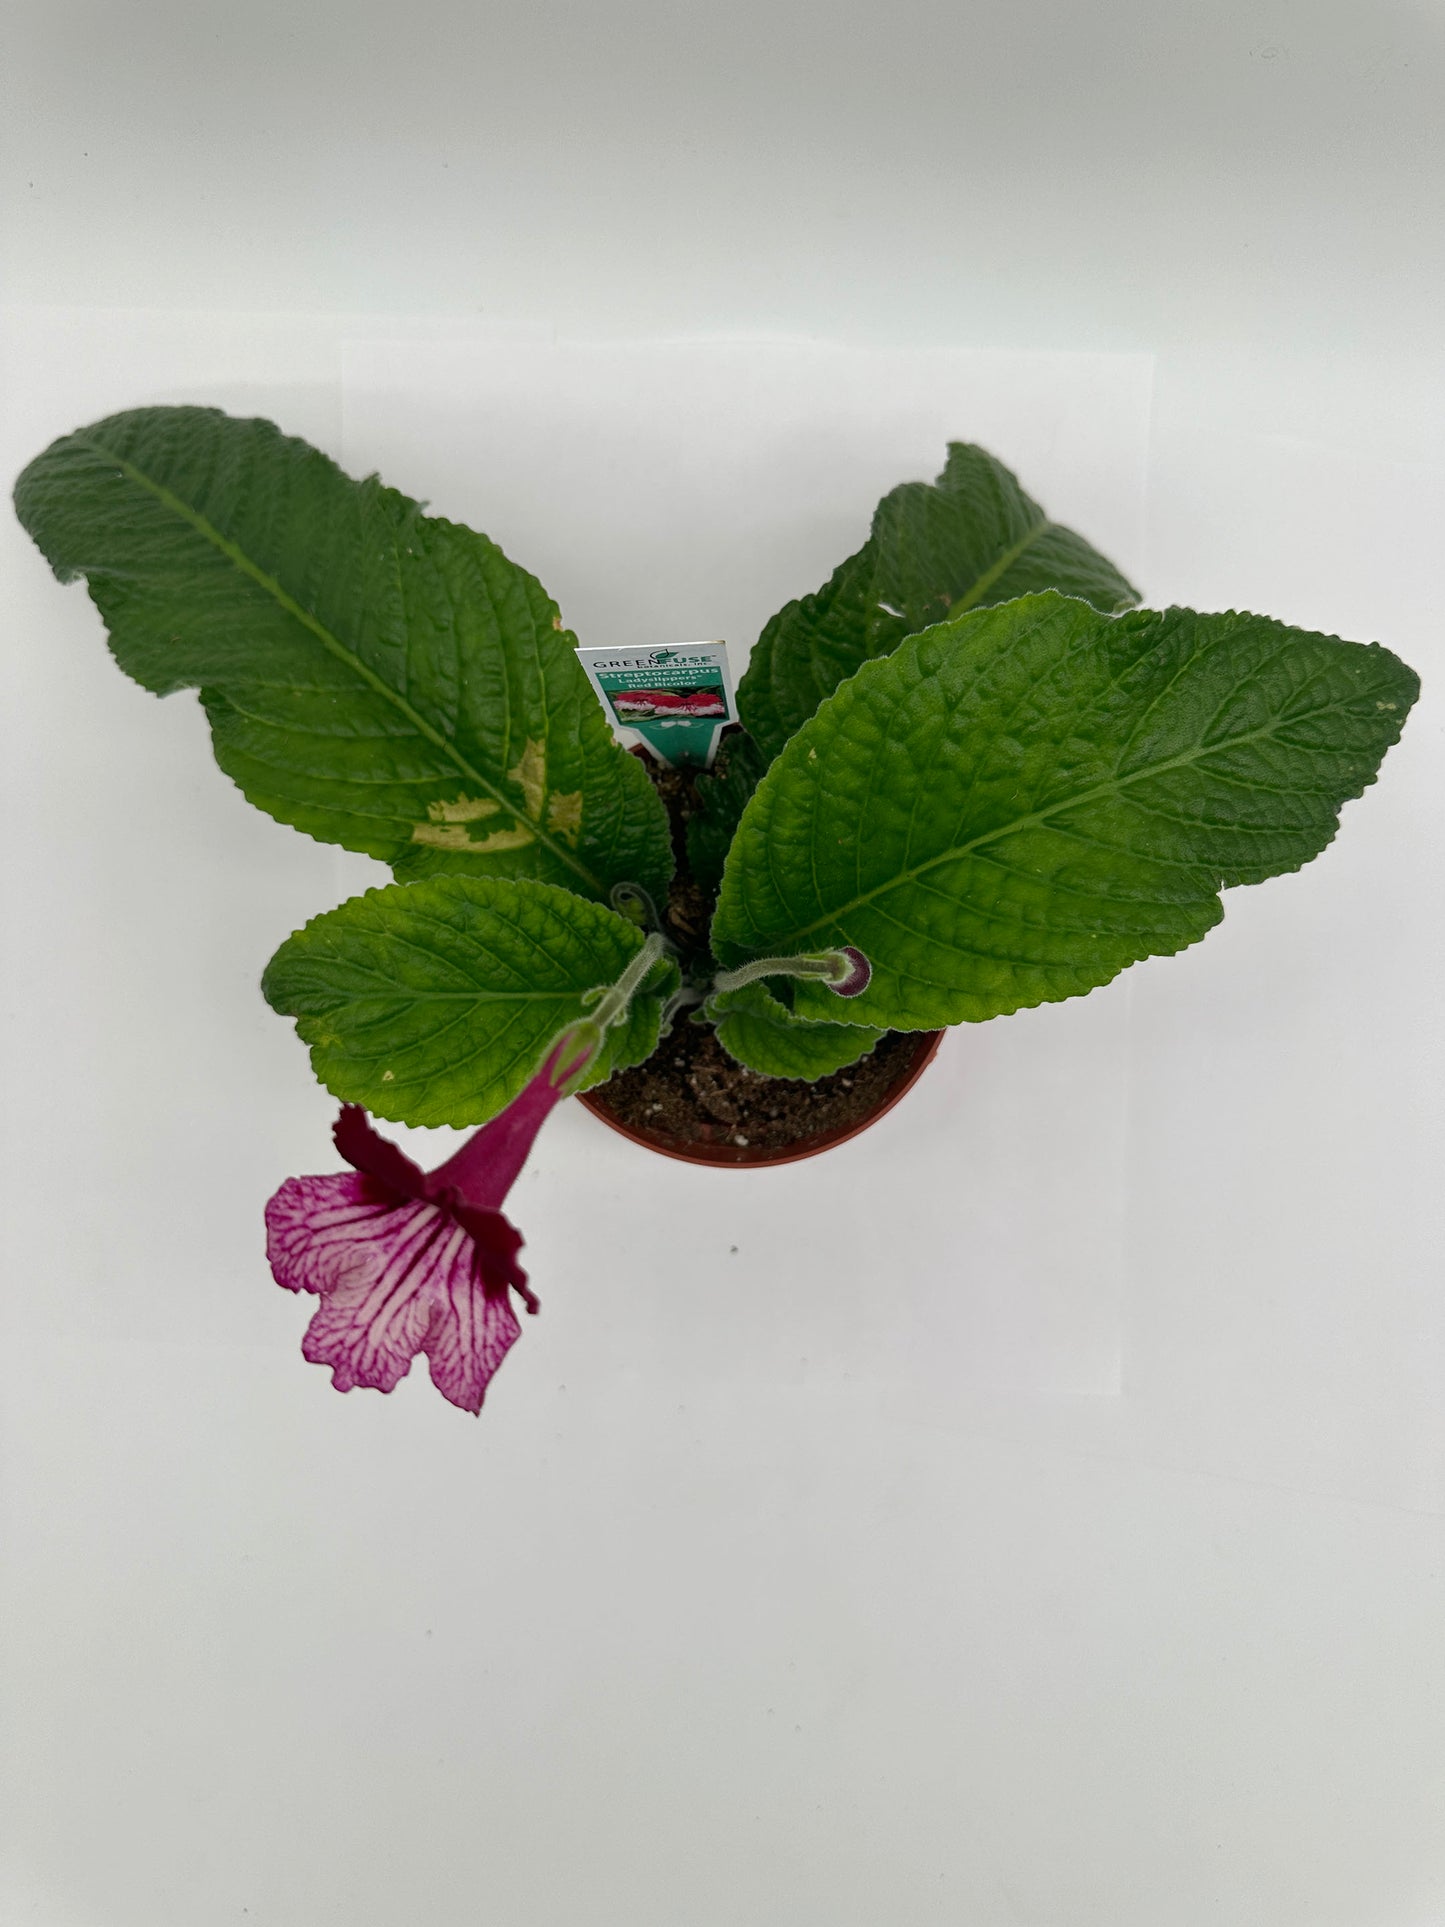 Red BiColor Streptocarpus Ladyslipper (Cape Primrose) Live Plant in 4" nursery pot